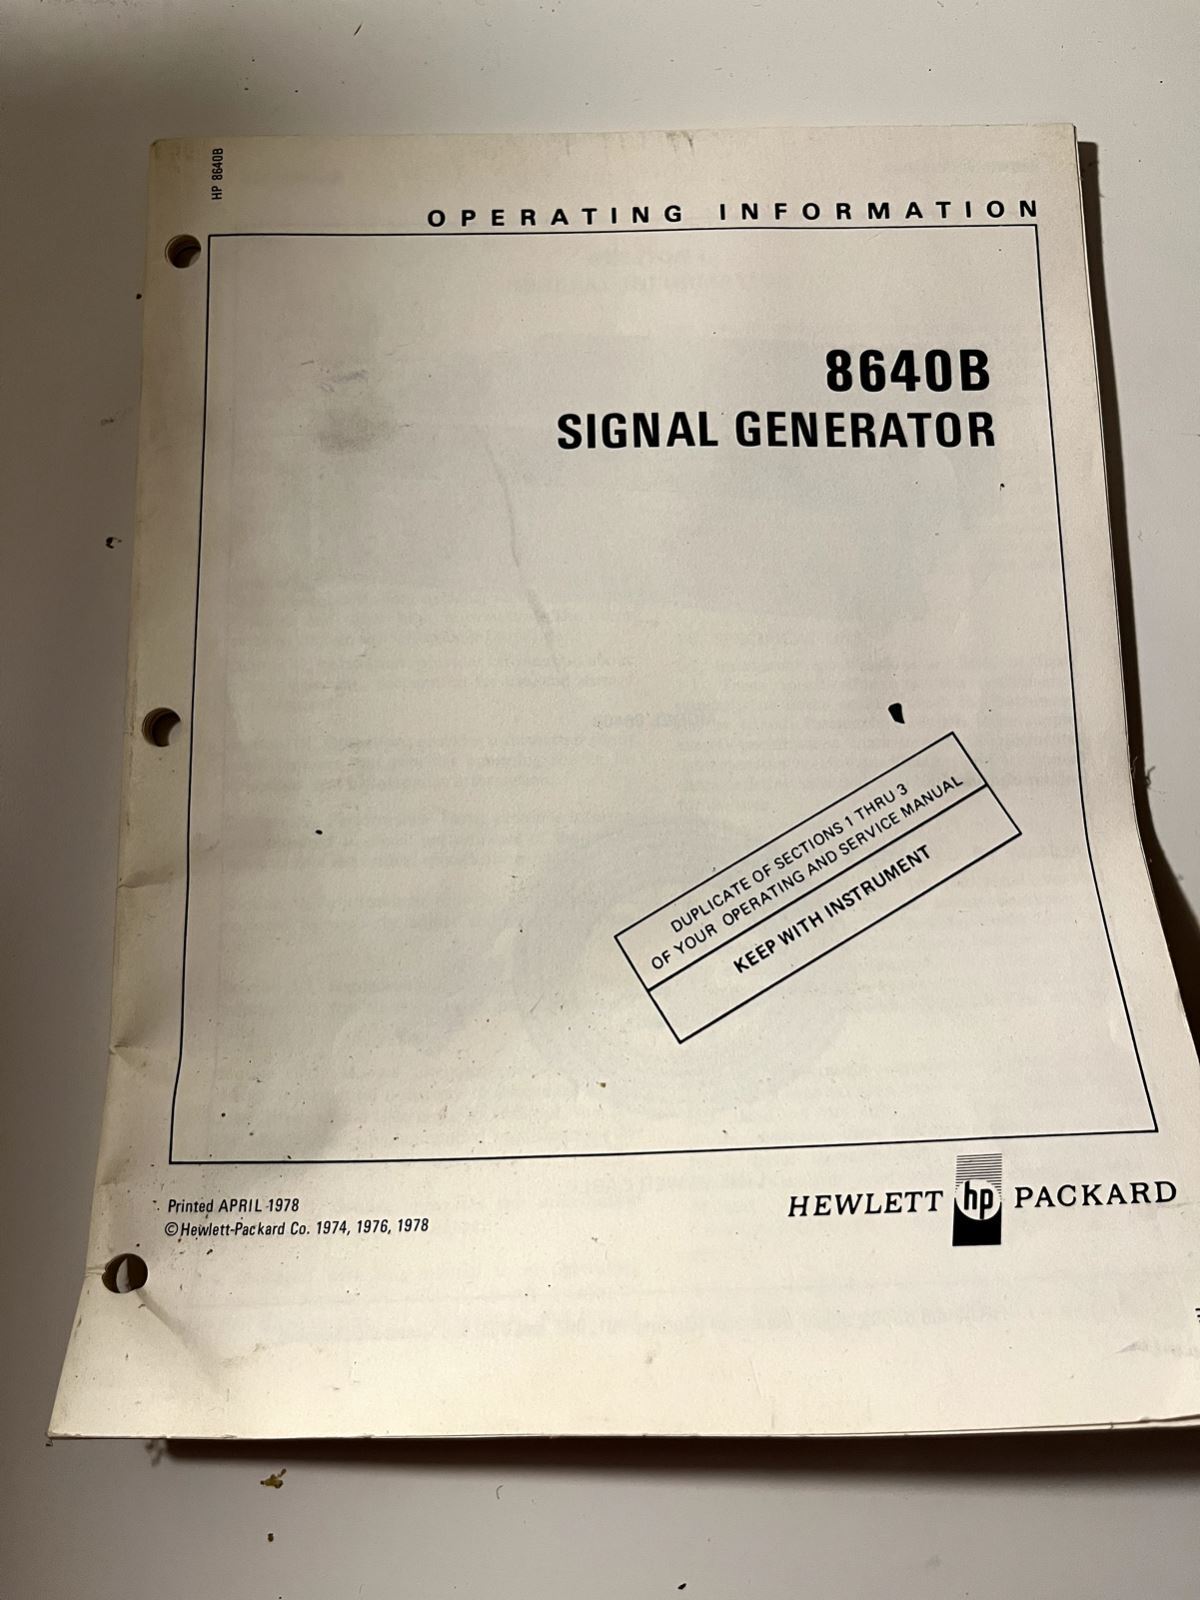 Hewlett Packard 8640B Signal Generator Operating Information